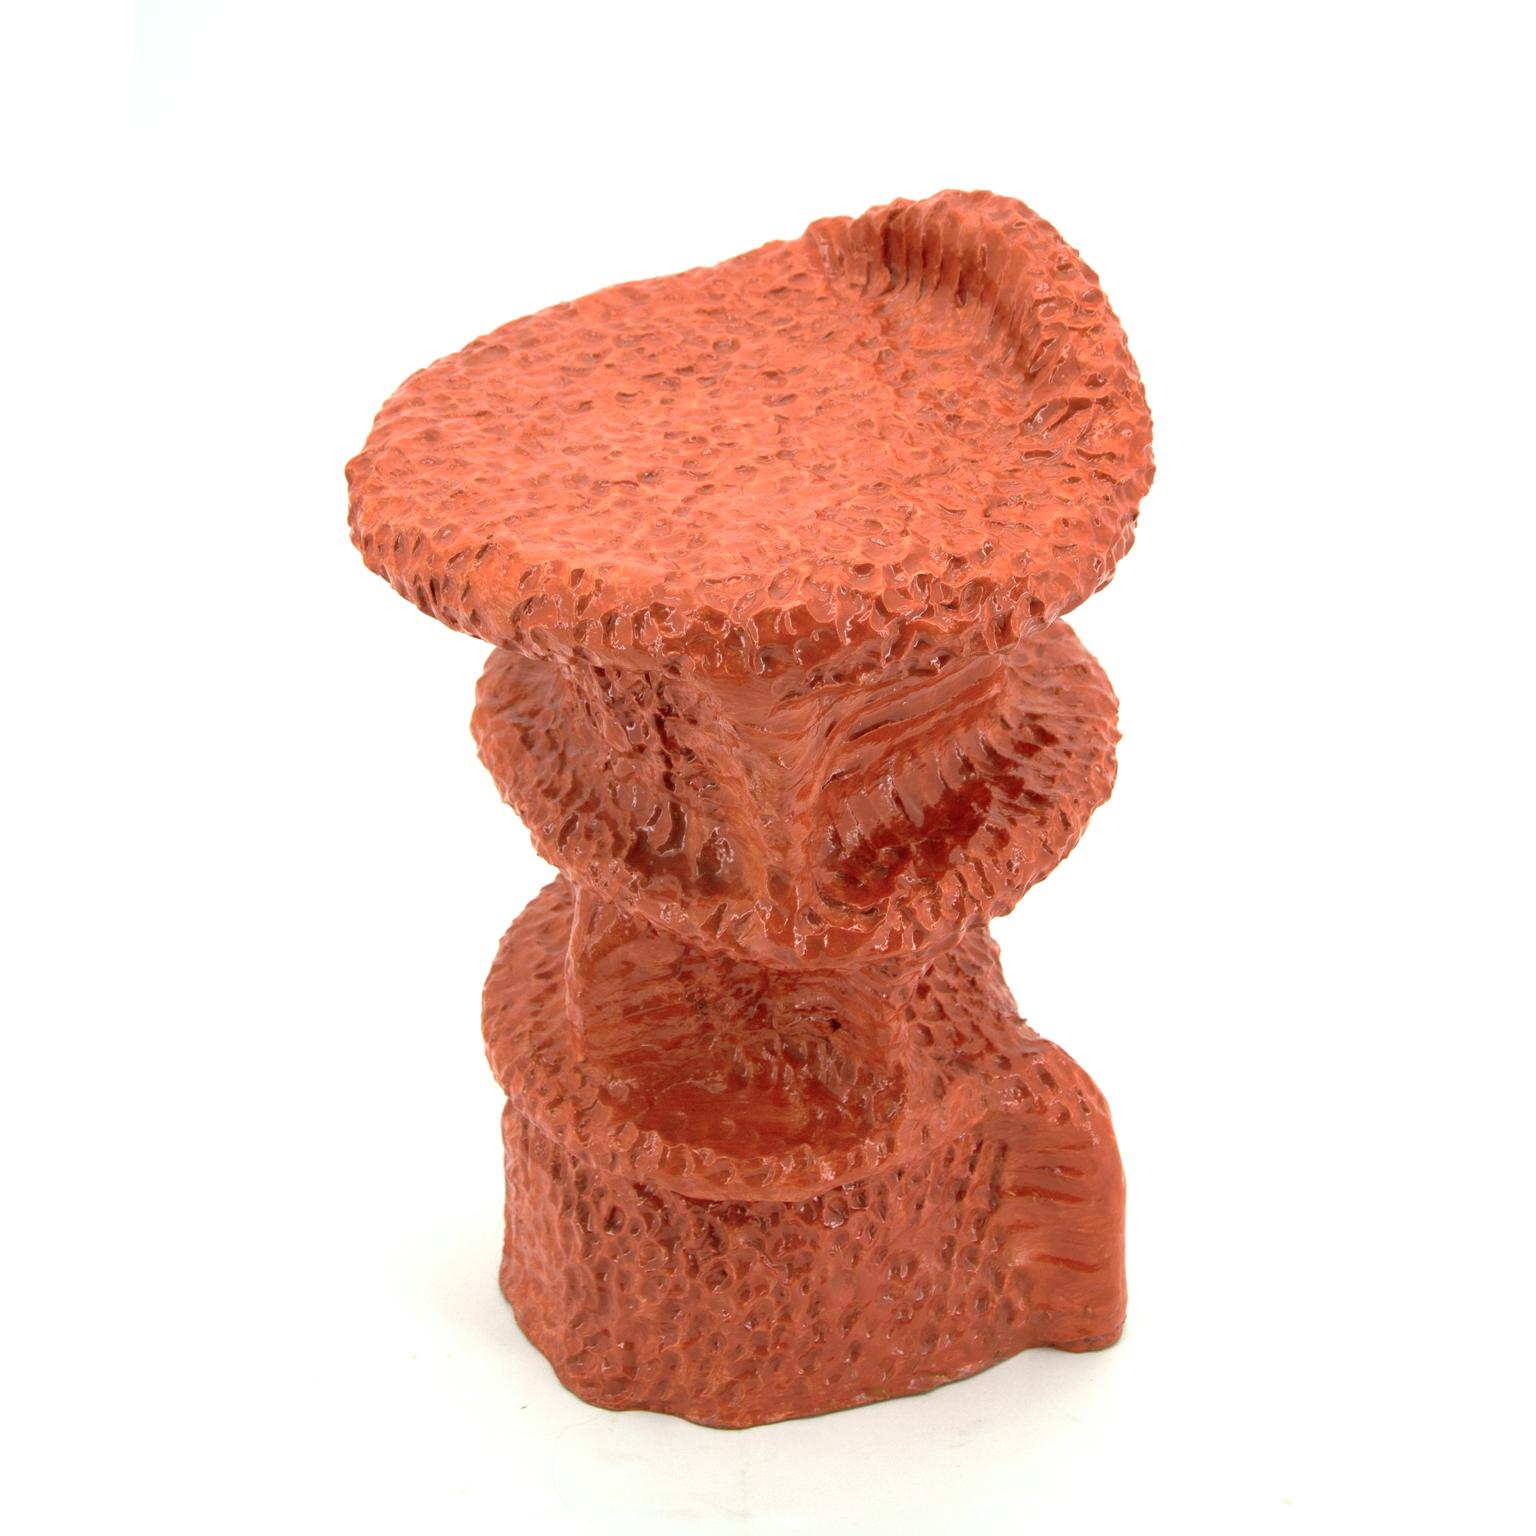 Hand-Crafted Contemporary Ceramic Furniture, Stool, 2020, Rutger de Regt, The Netherlands